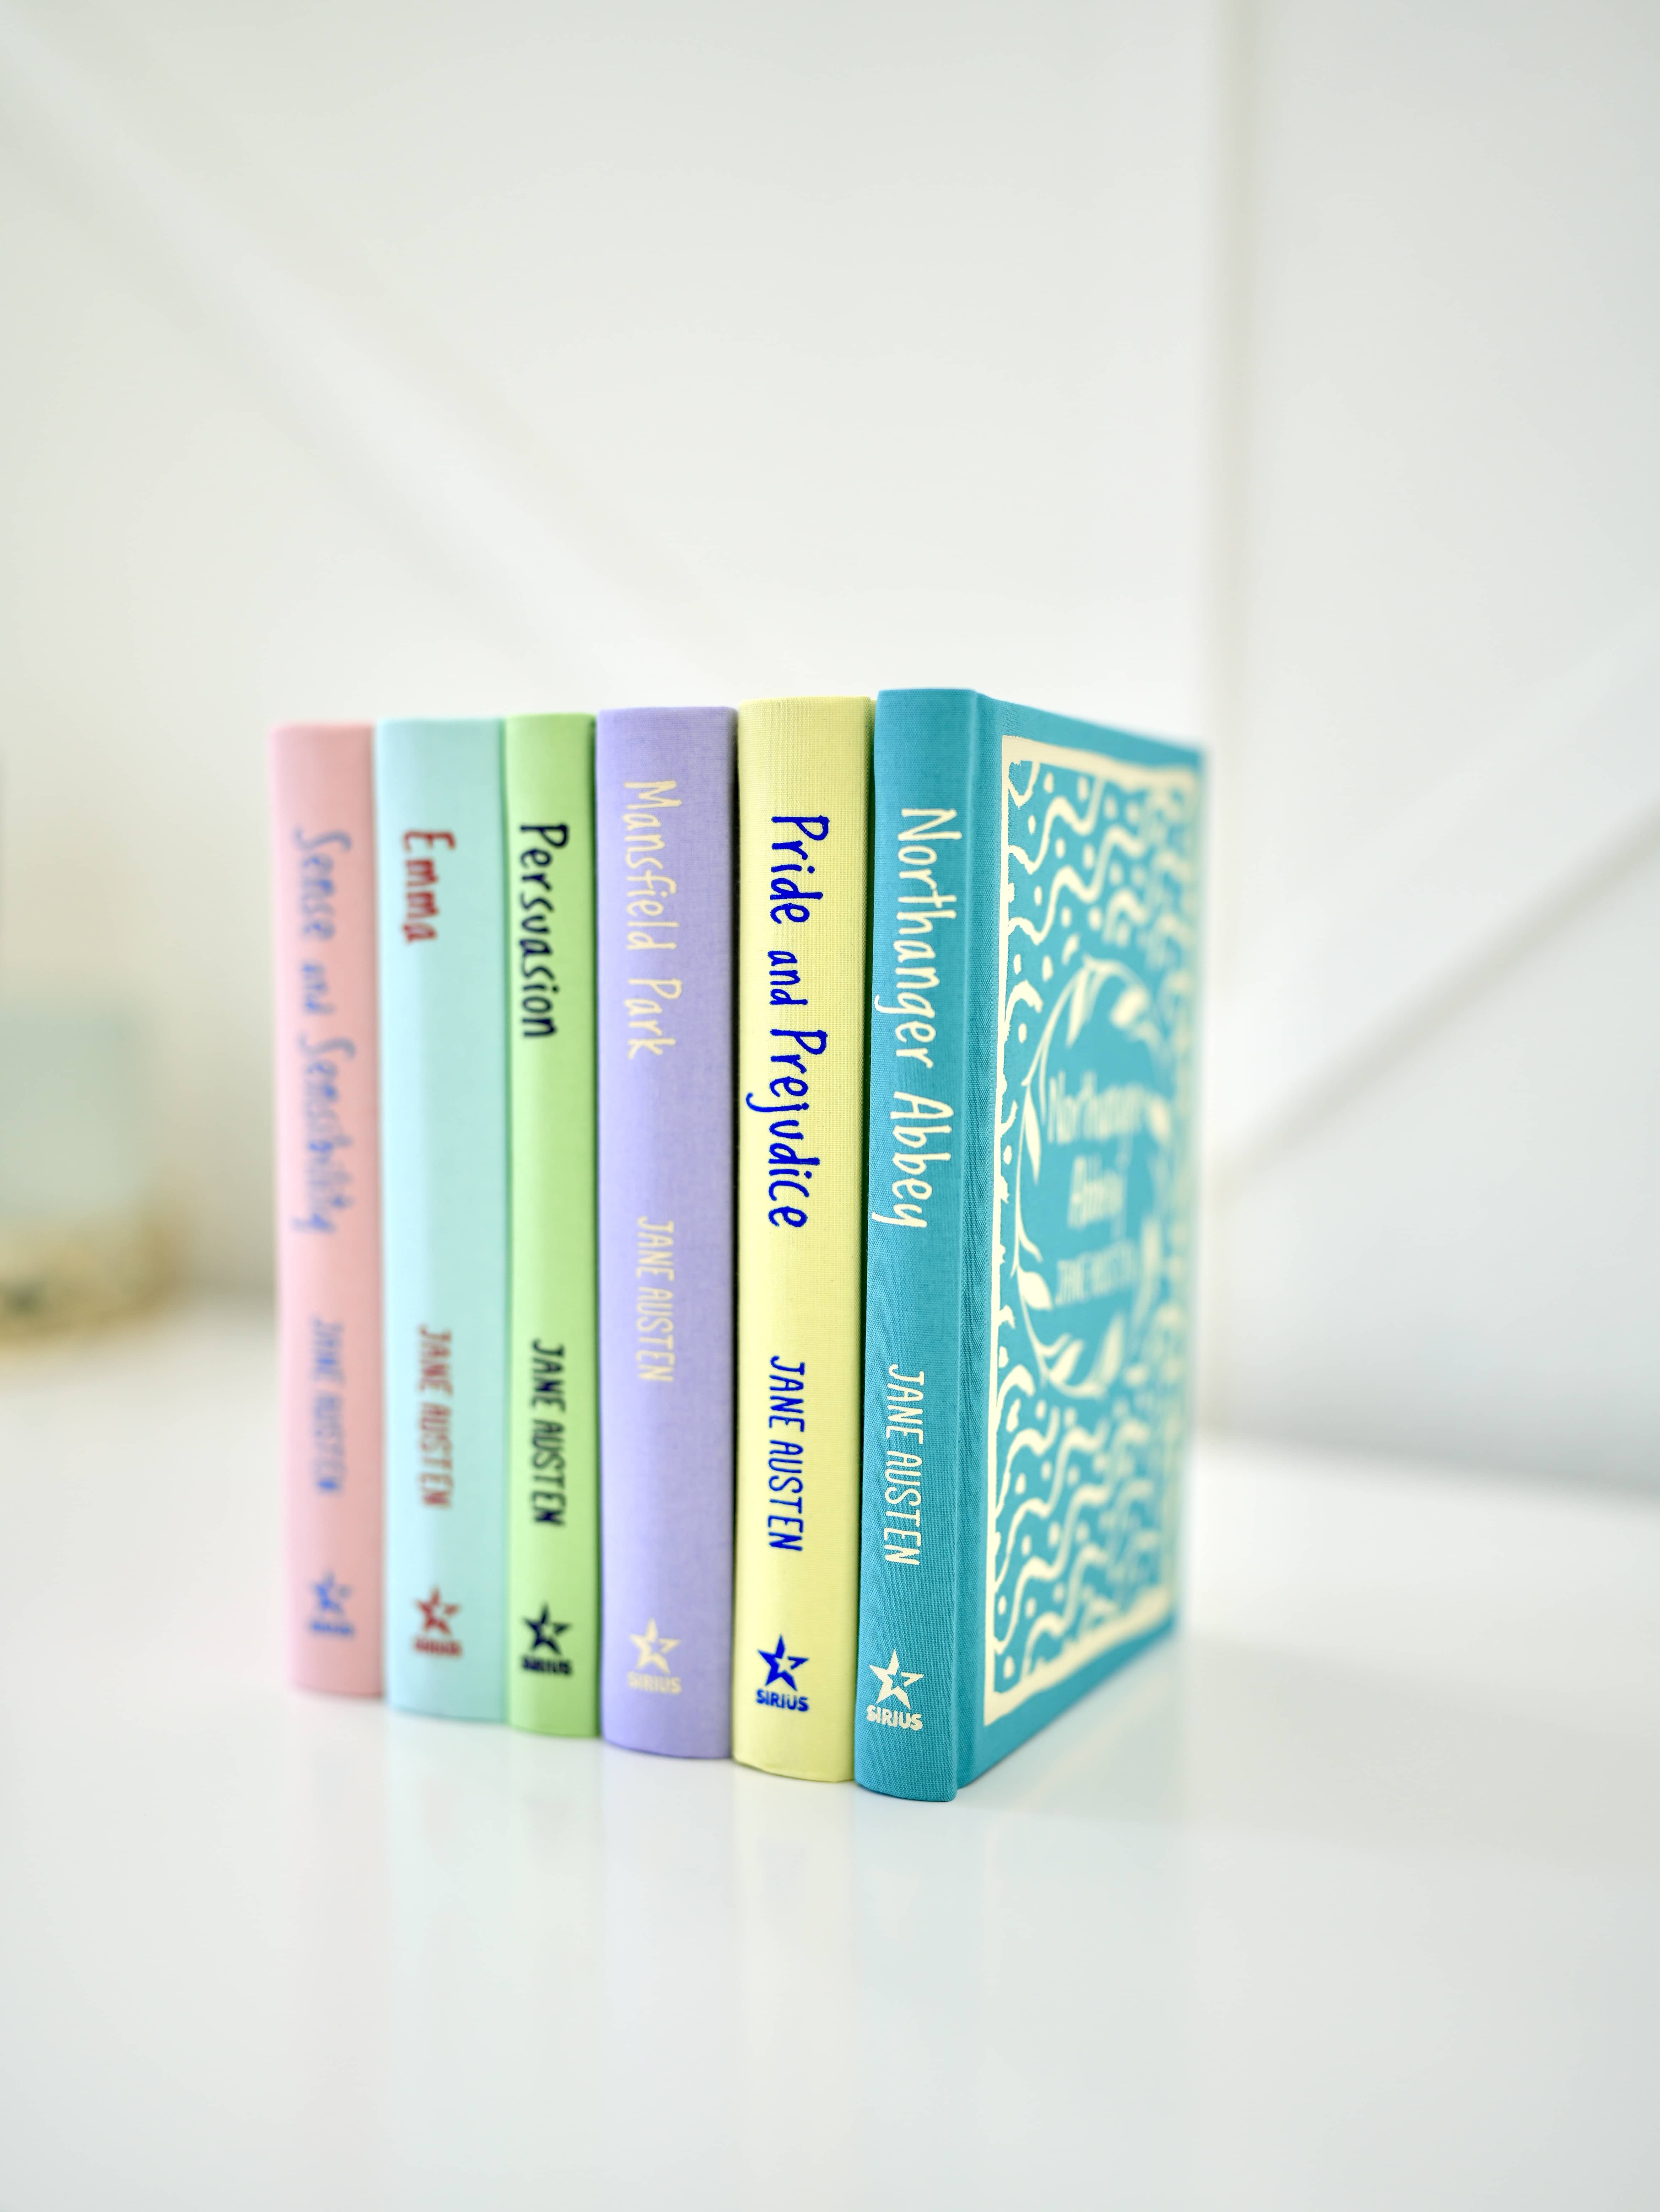 Jane Austen's Books in Order